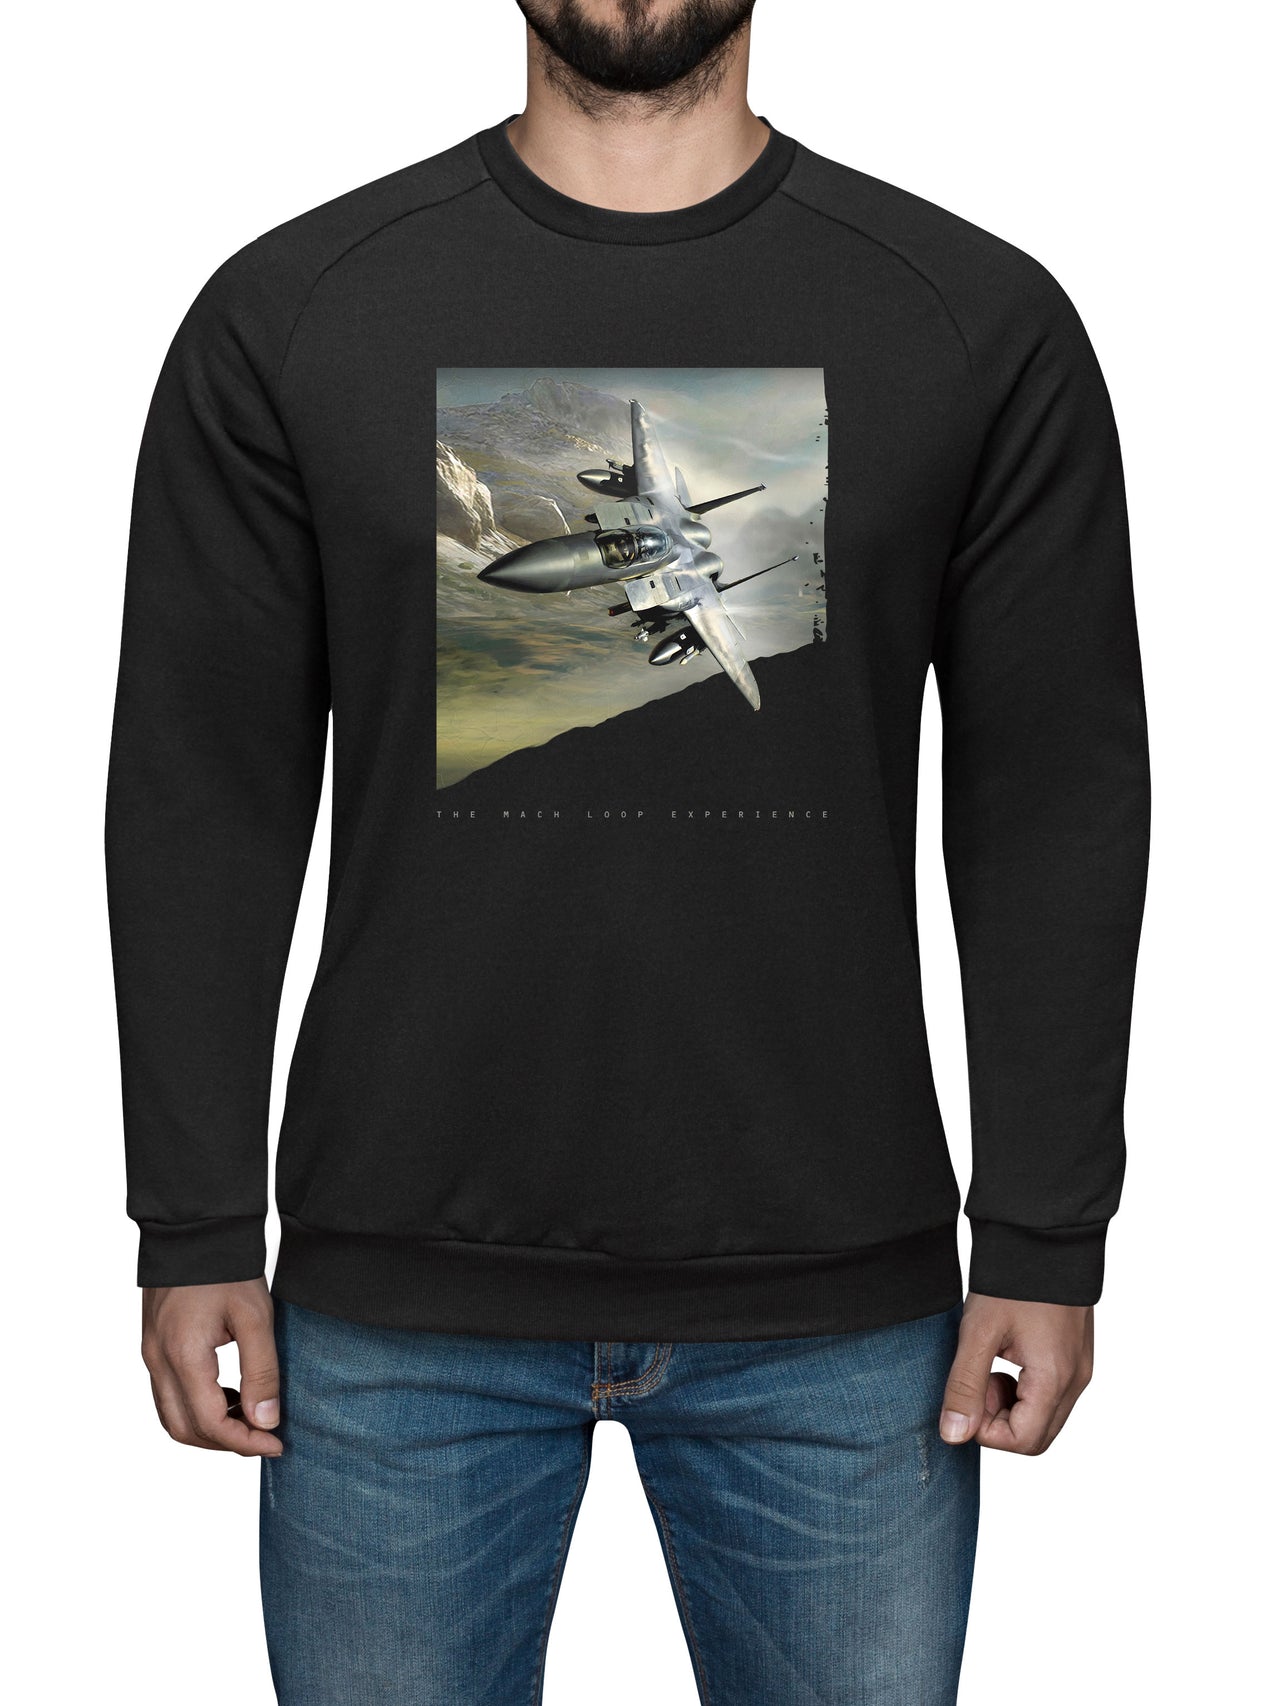 F-15 Eagle Mach Loop - Sweat Shirt